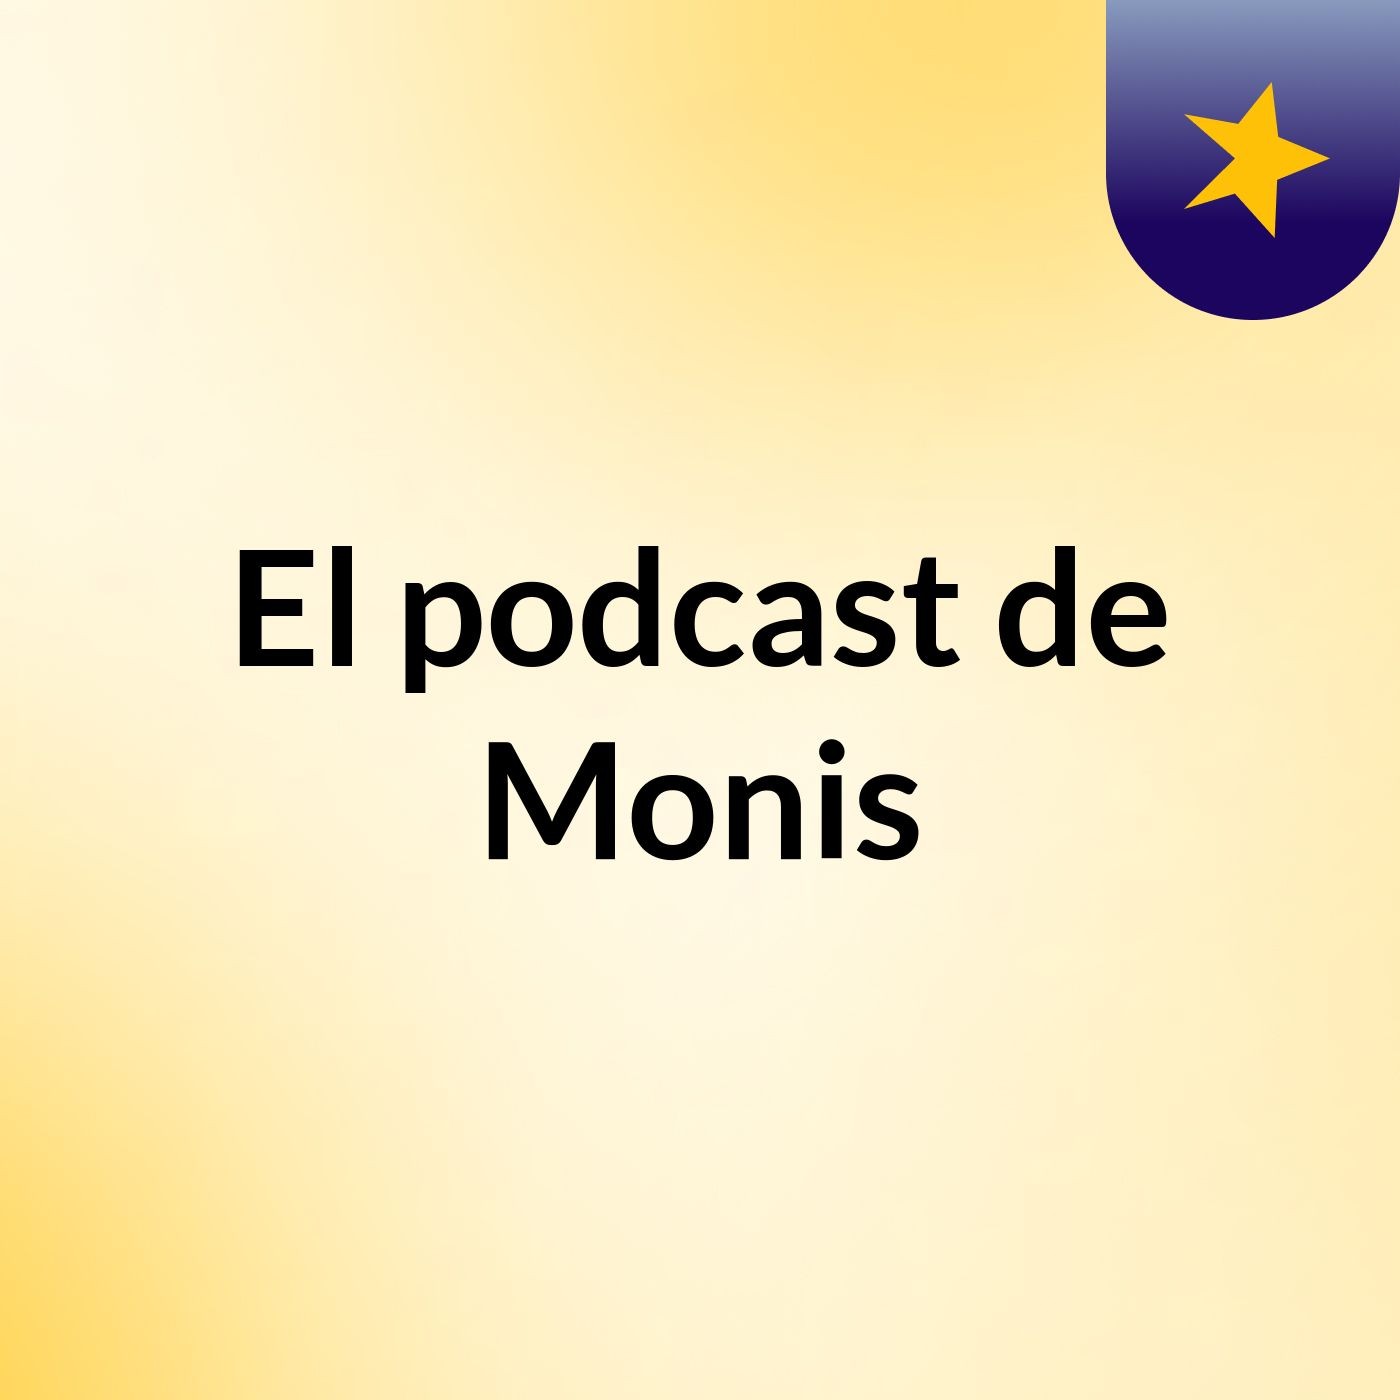 El podcast de Monis